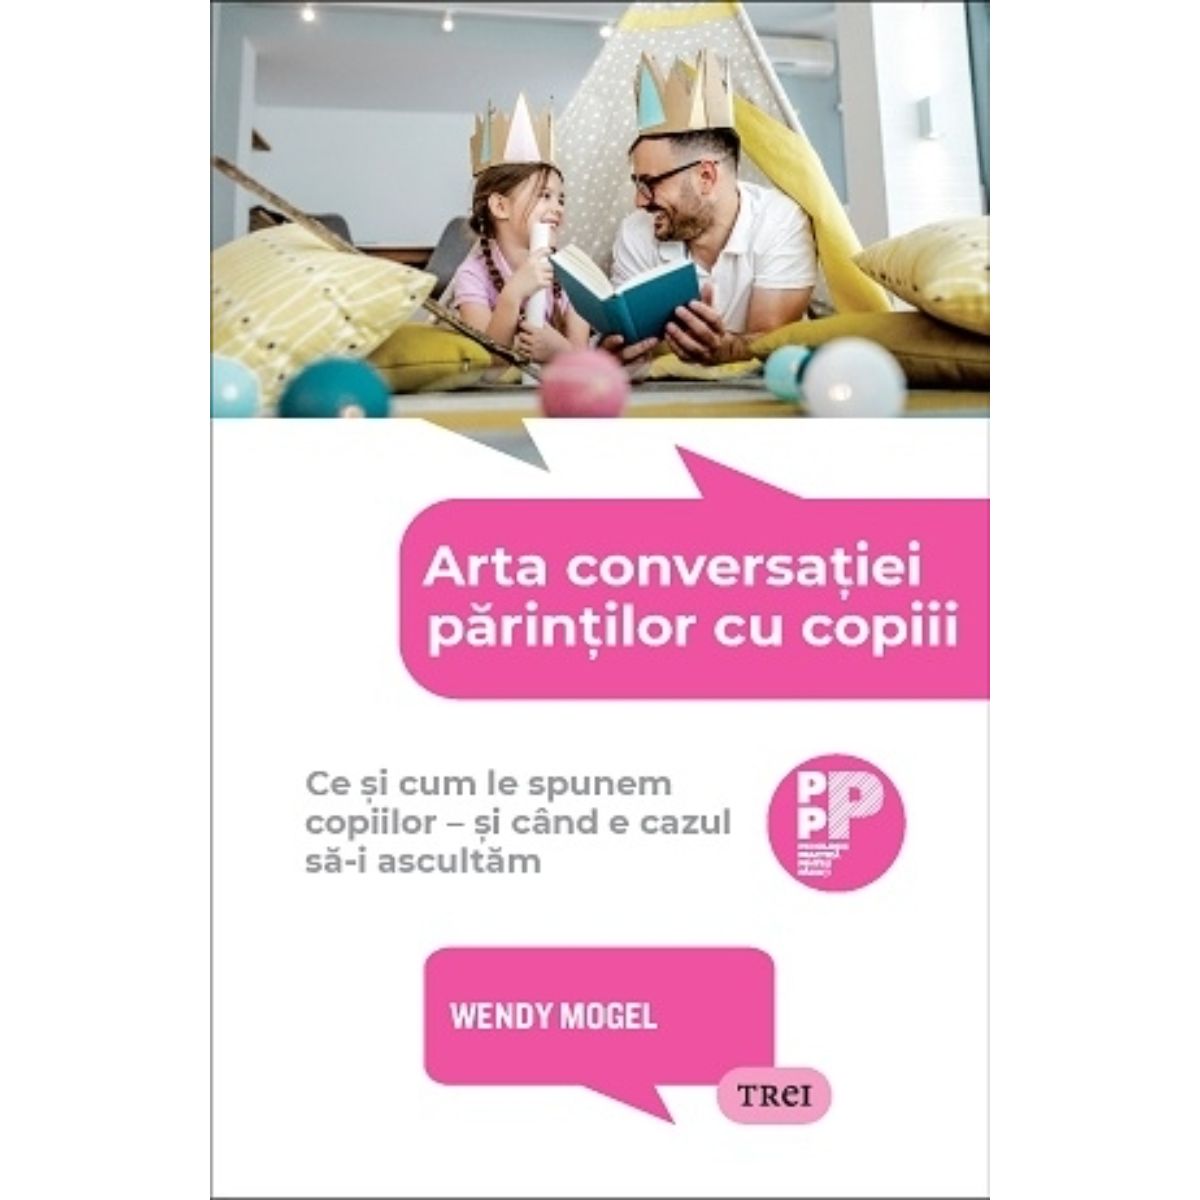 Arta conversatiei parintilor cu copiii, Editura Trei